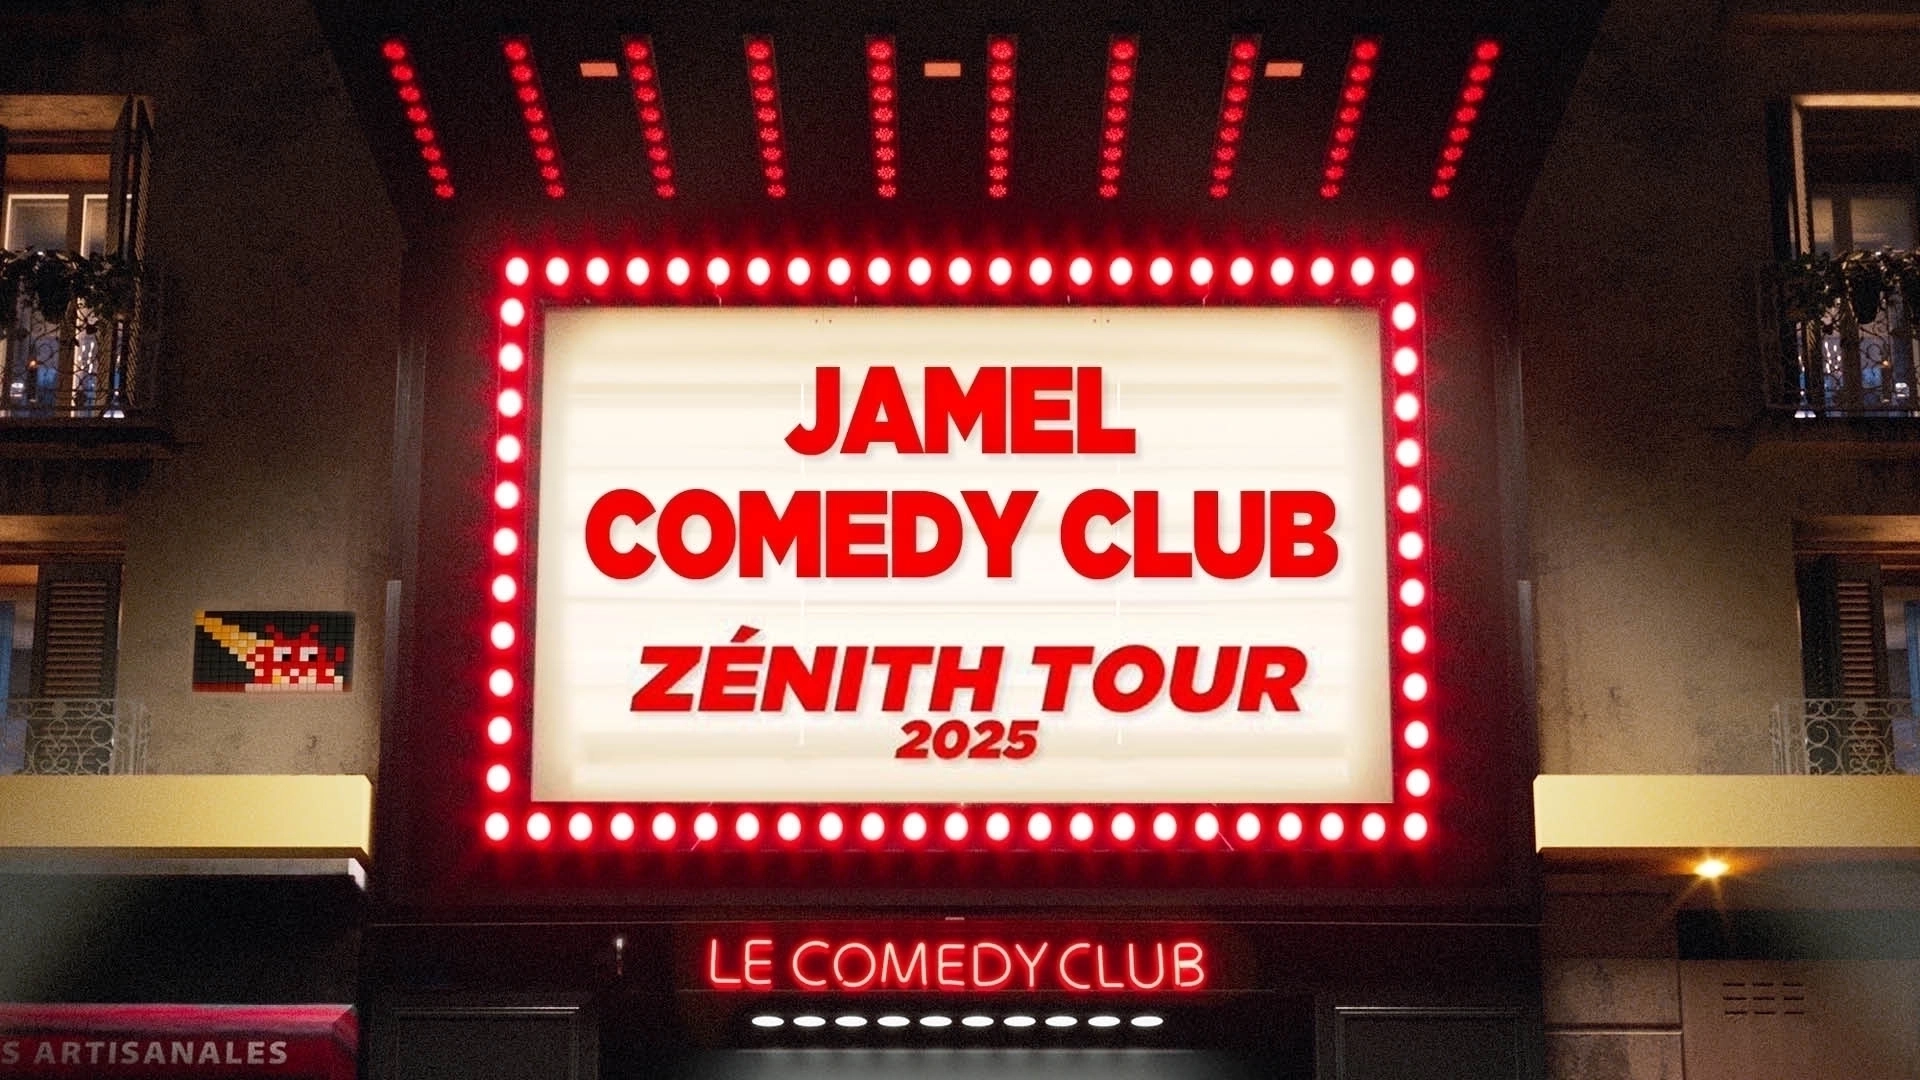 Jamel Comedy Club Zenith Tour 2025 en Le Dome Tickets